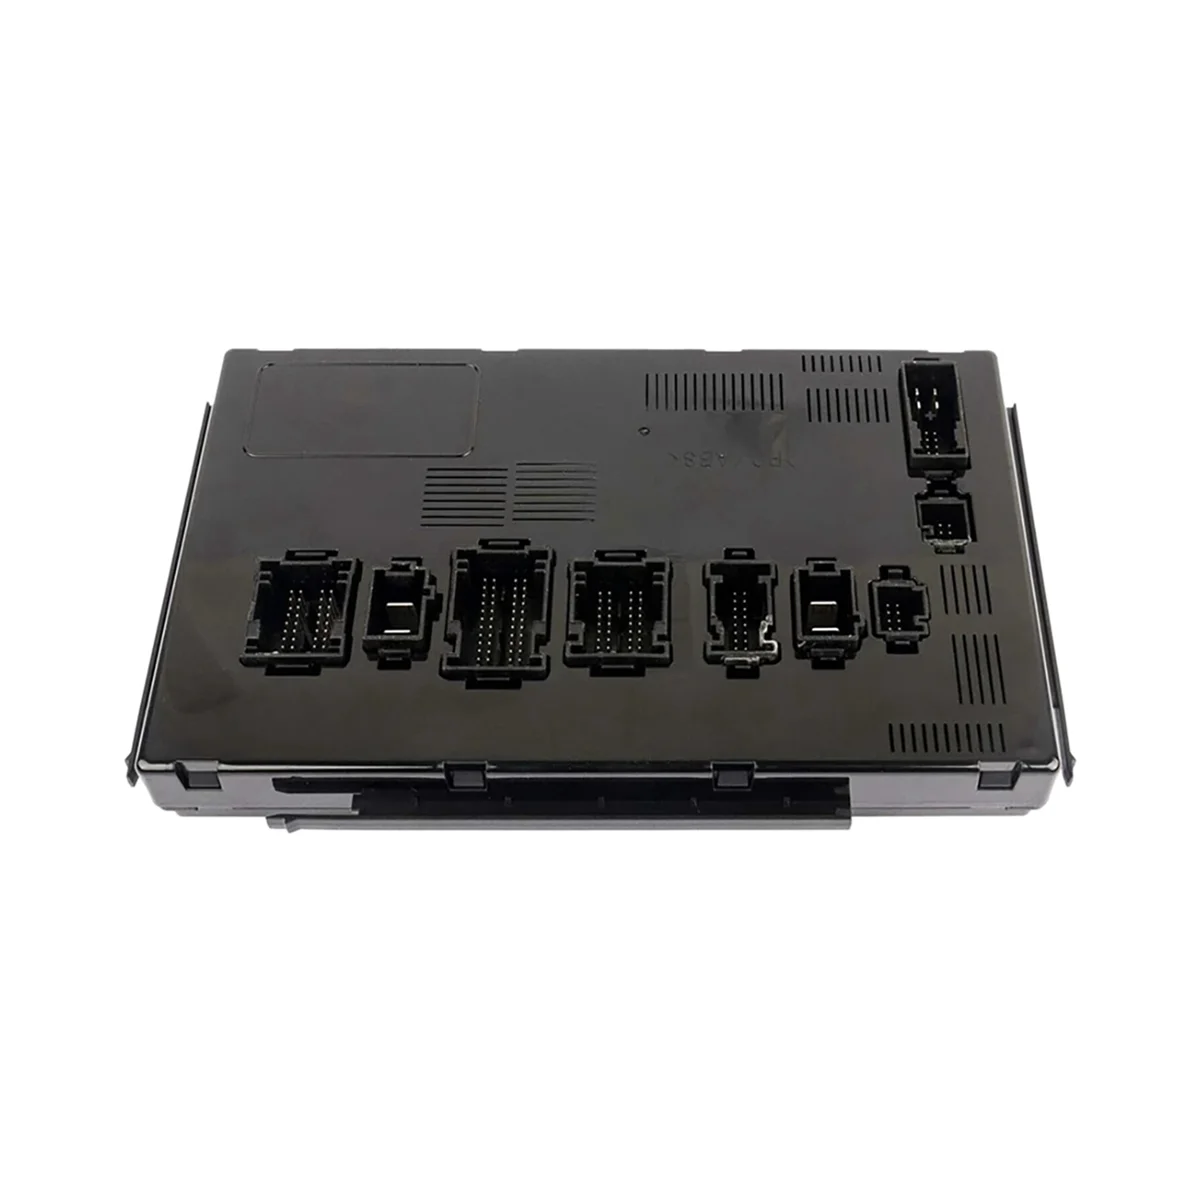 

Модуль сбора заднего сигнала автомобиля SAM блок управления A1649005104 для Mercedes X164 W164 W251 ML350 GL320 GL350 GL500